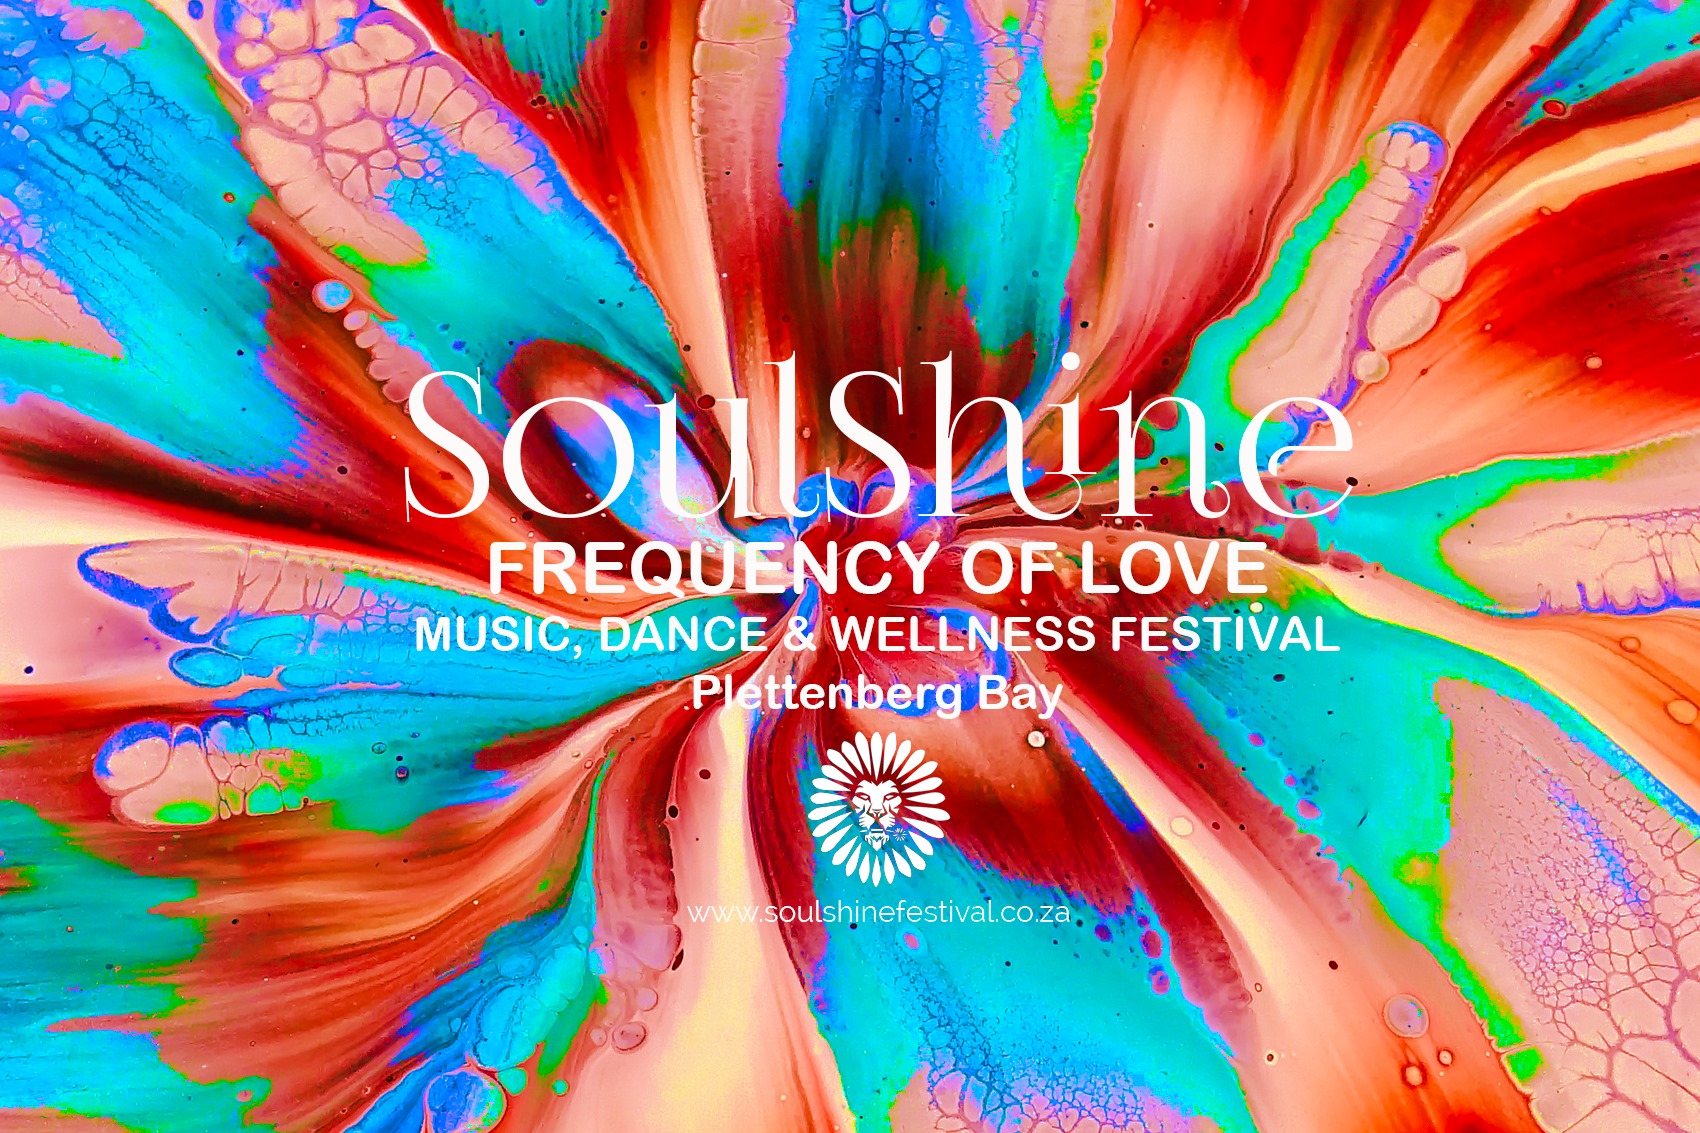 Soulshine Festival Frequency of Love